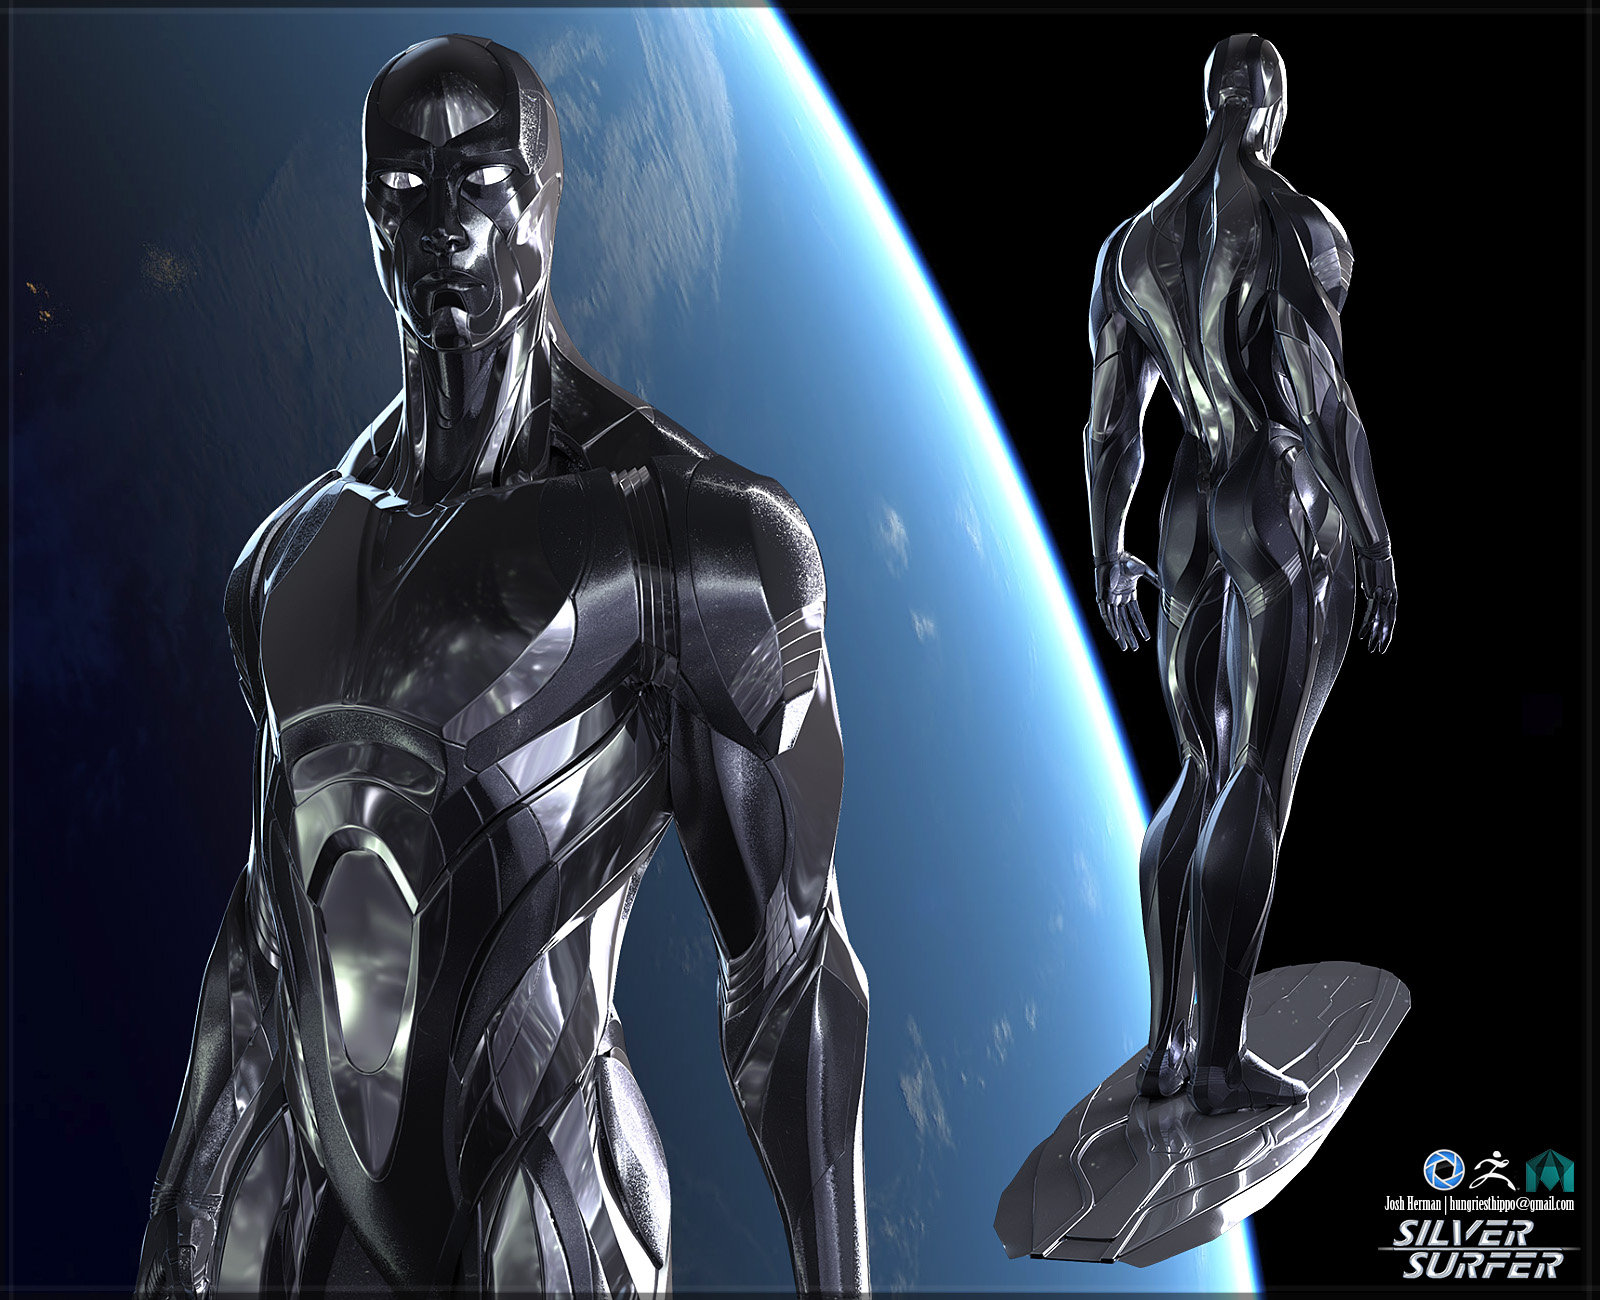 ArtStation - Superheroes - Silver surfer